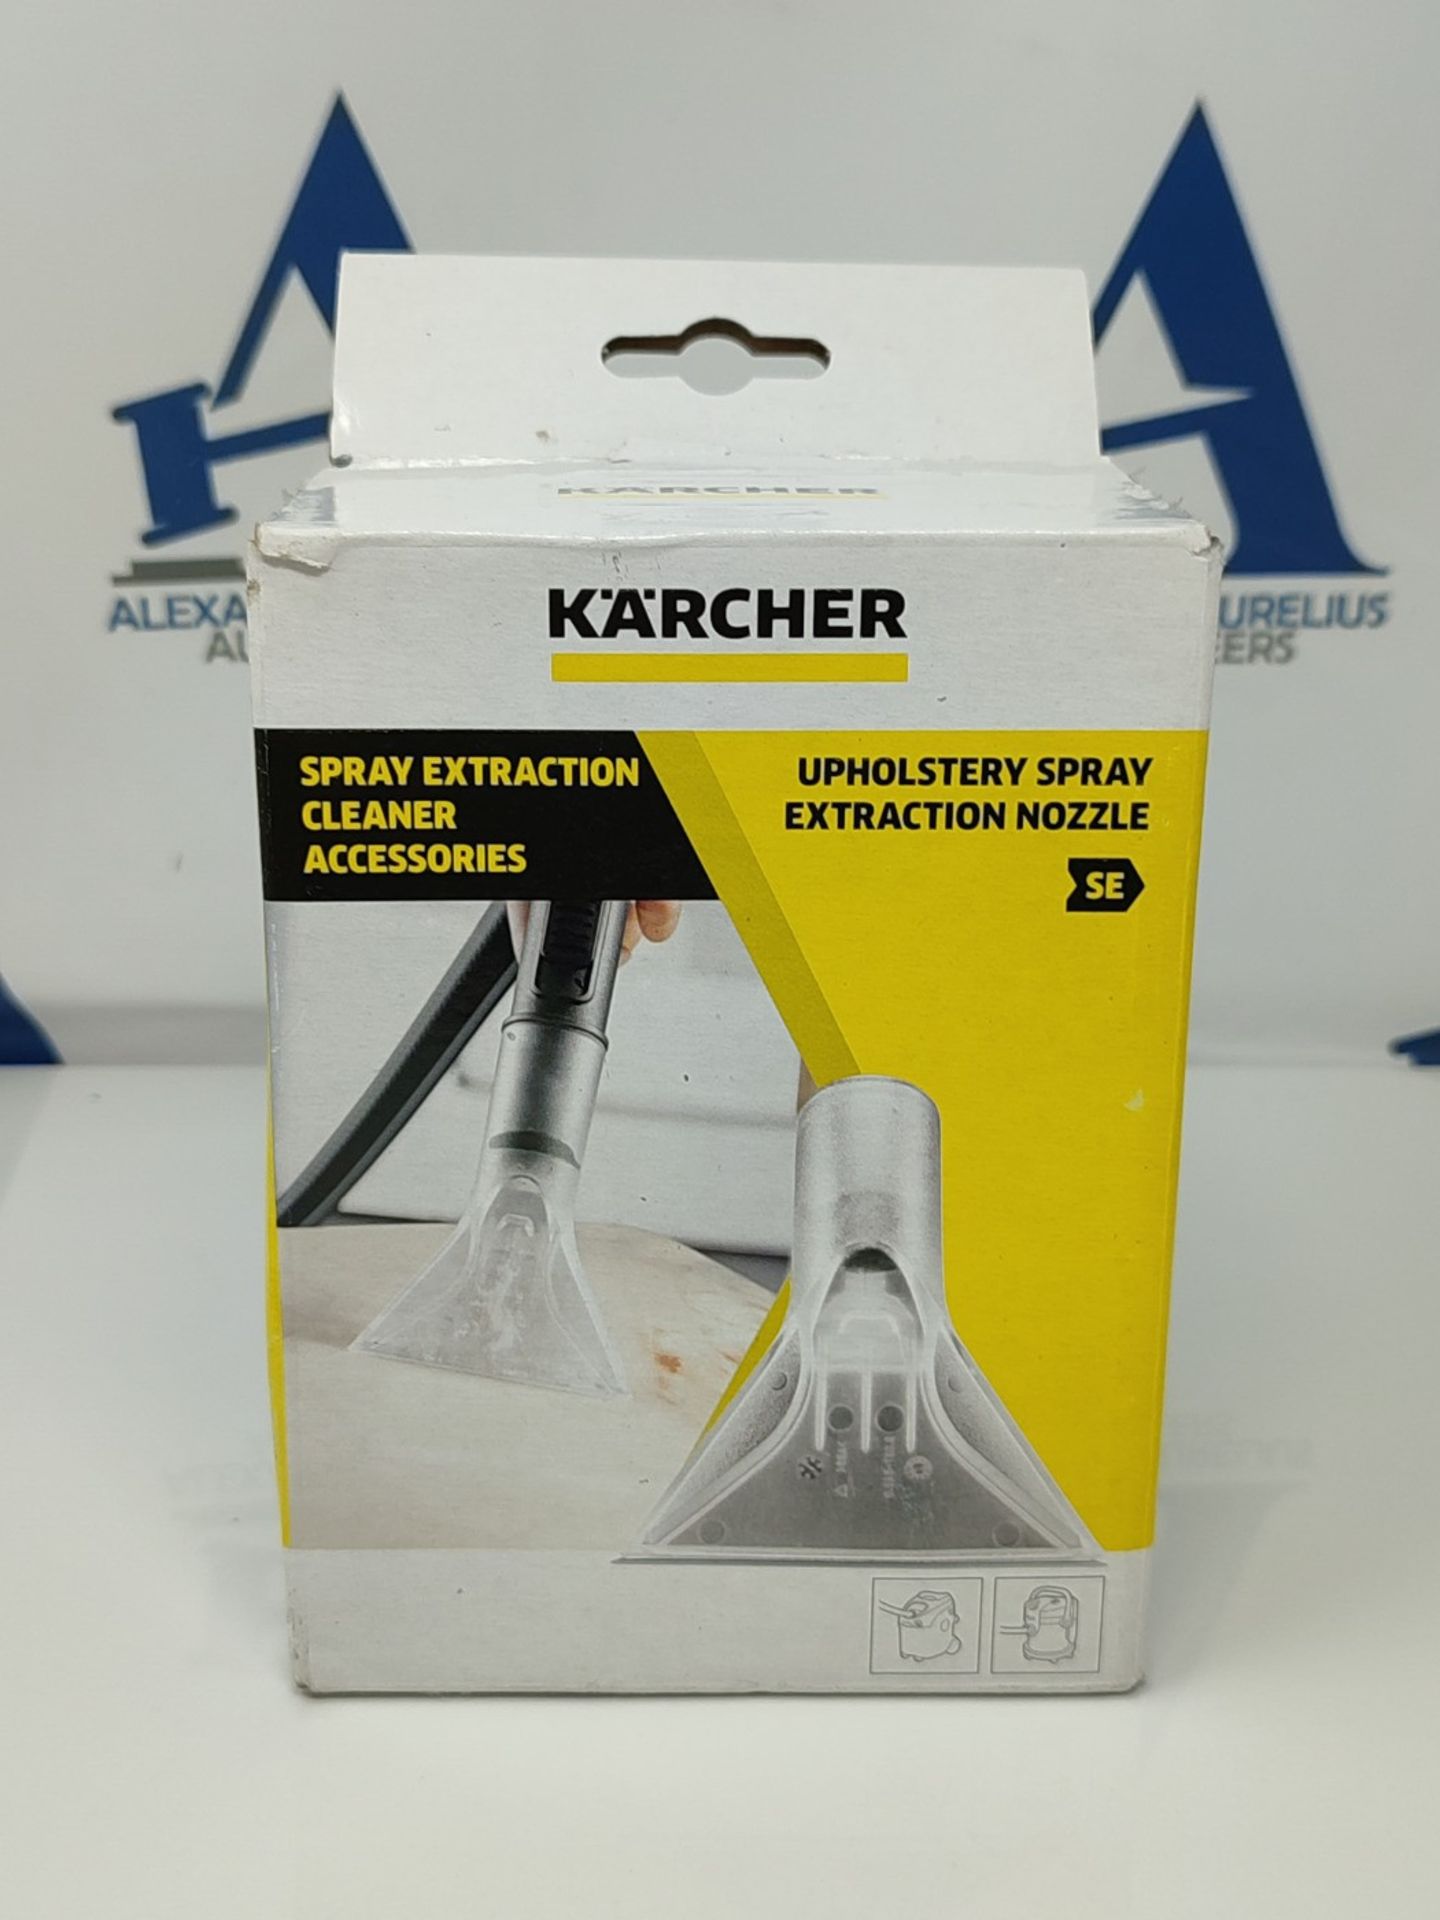 Kärcher 2.885-018.0 Hand Brush (German Import), White - Image 2 of 3